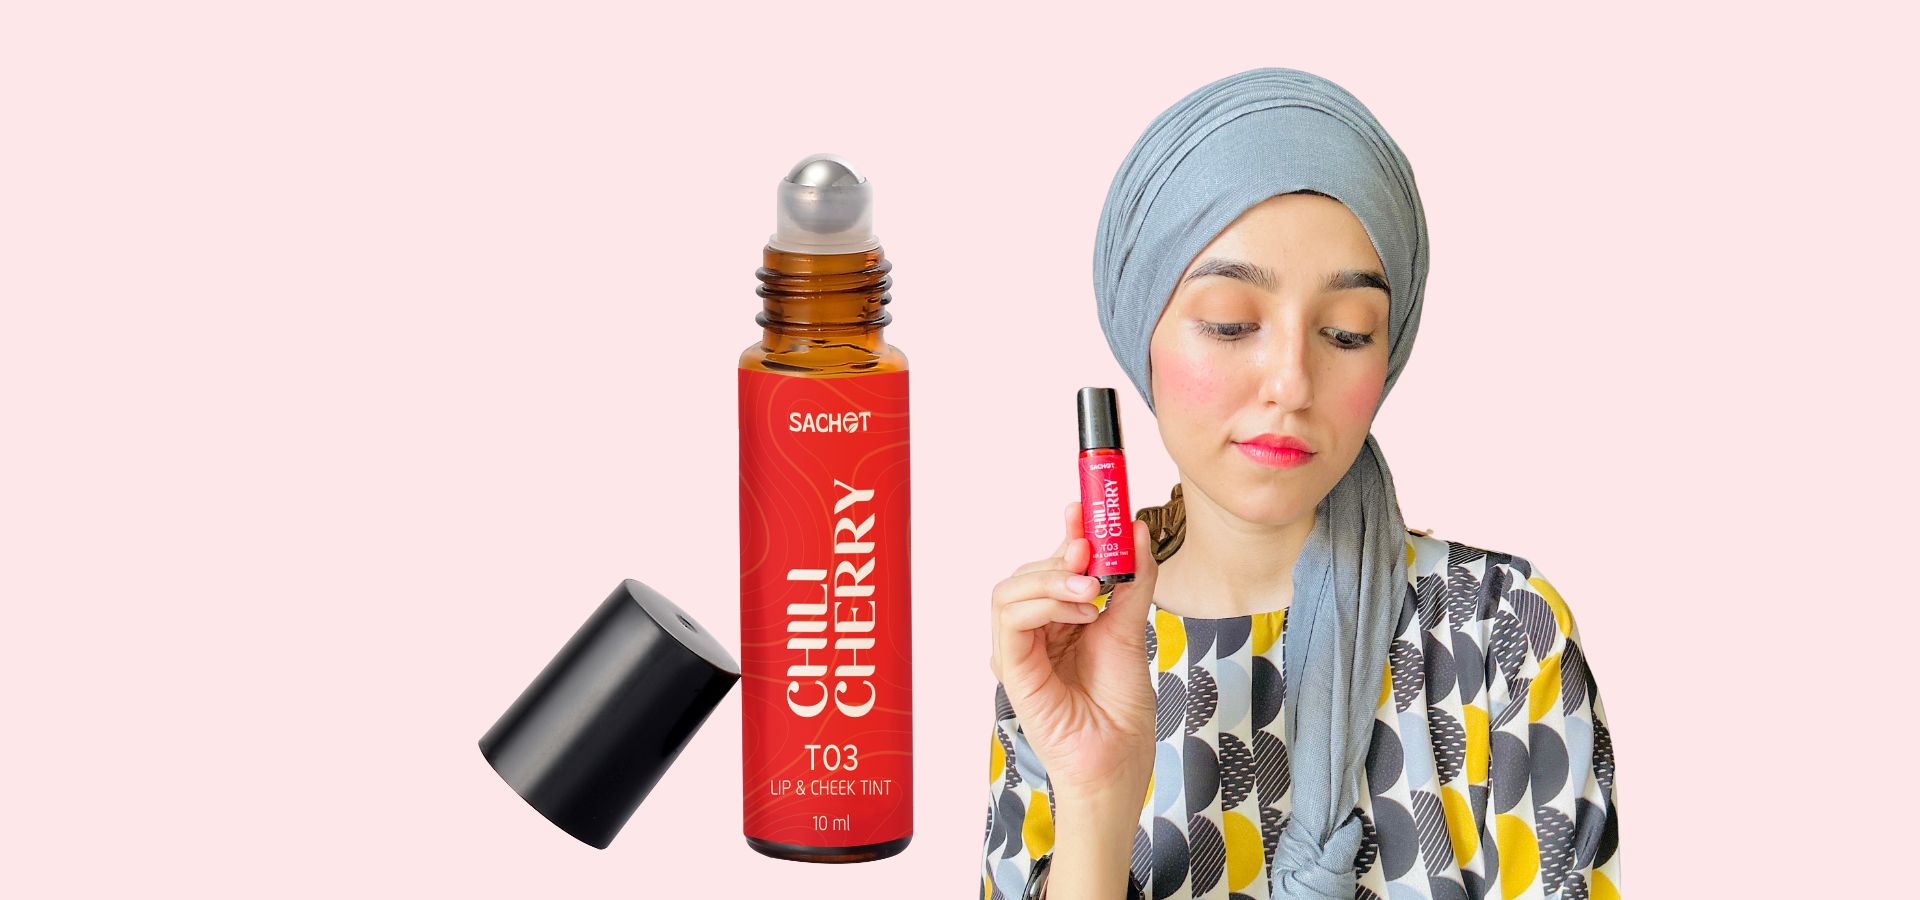 Chili Cherry Lip and Cheek Roller Tint - T03